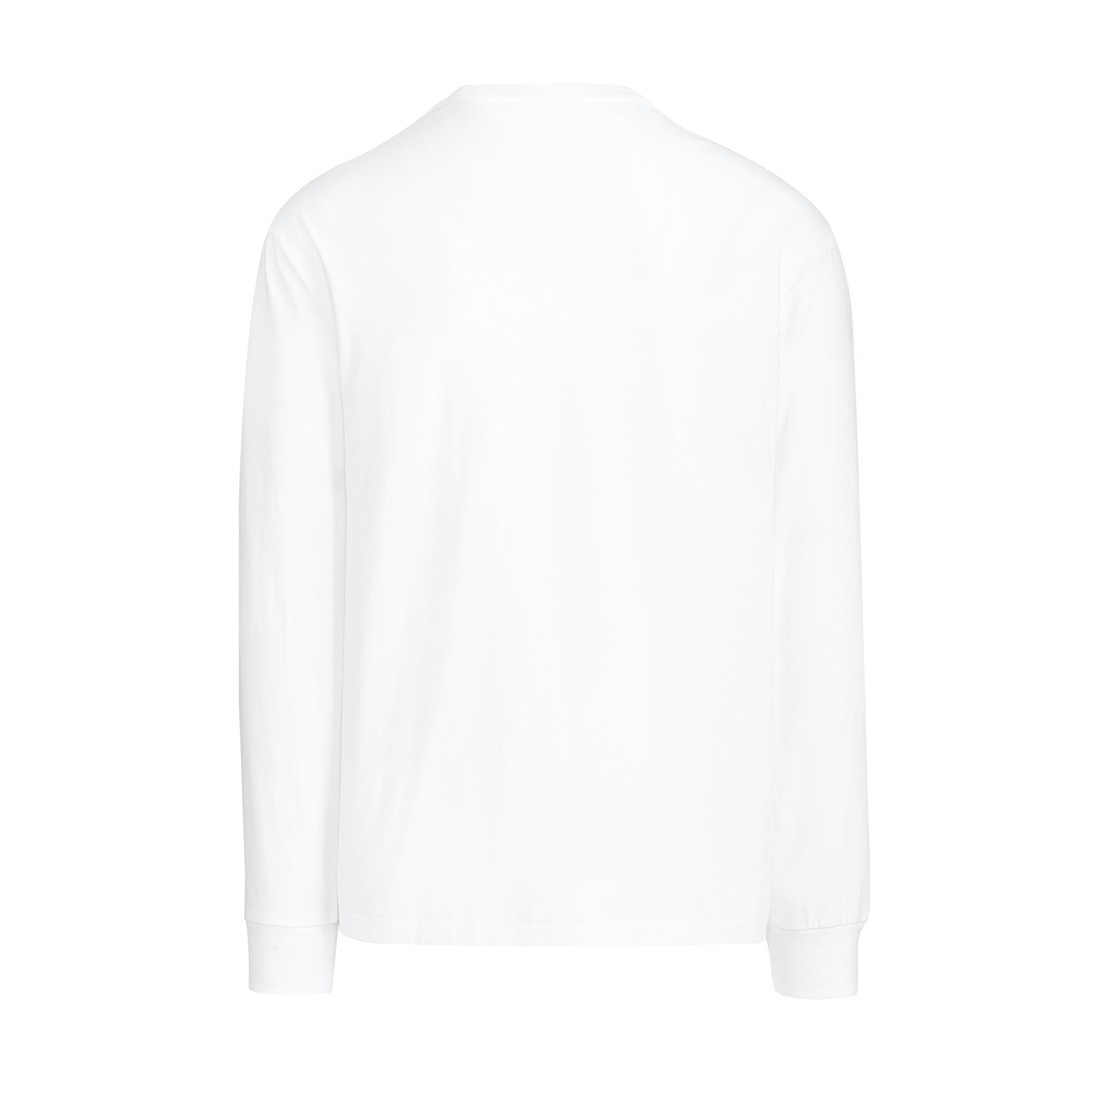 Plain White Long Sleeve Shirts